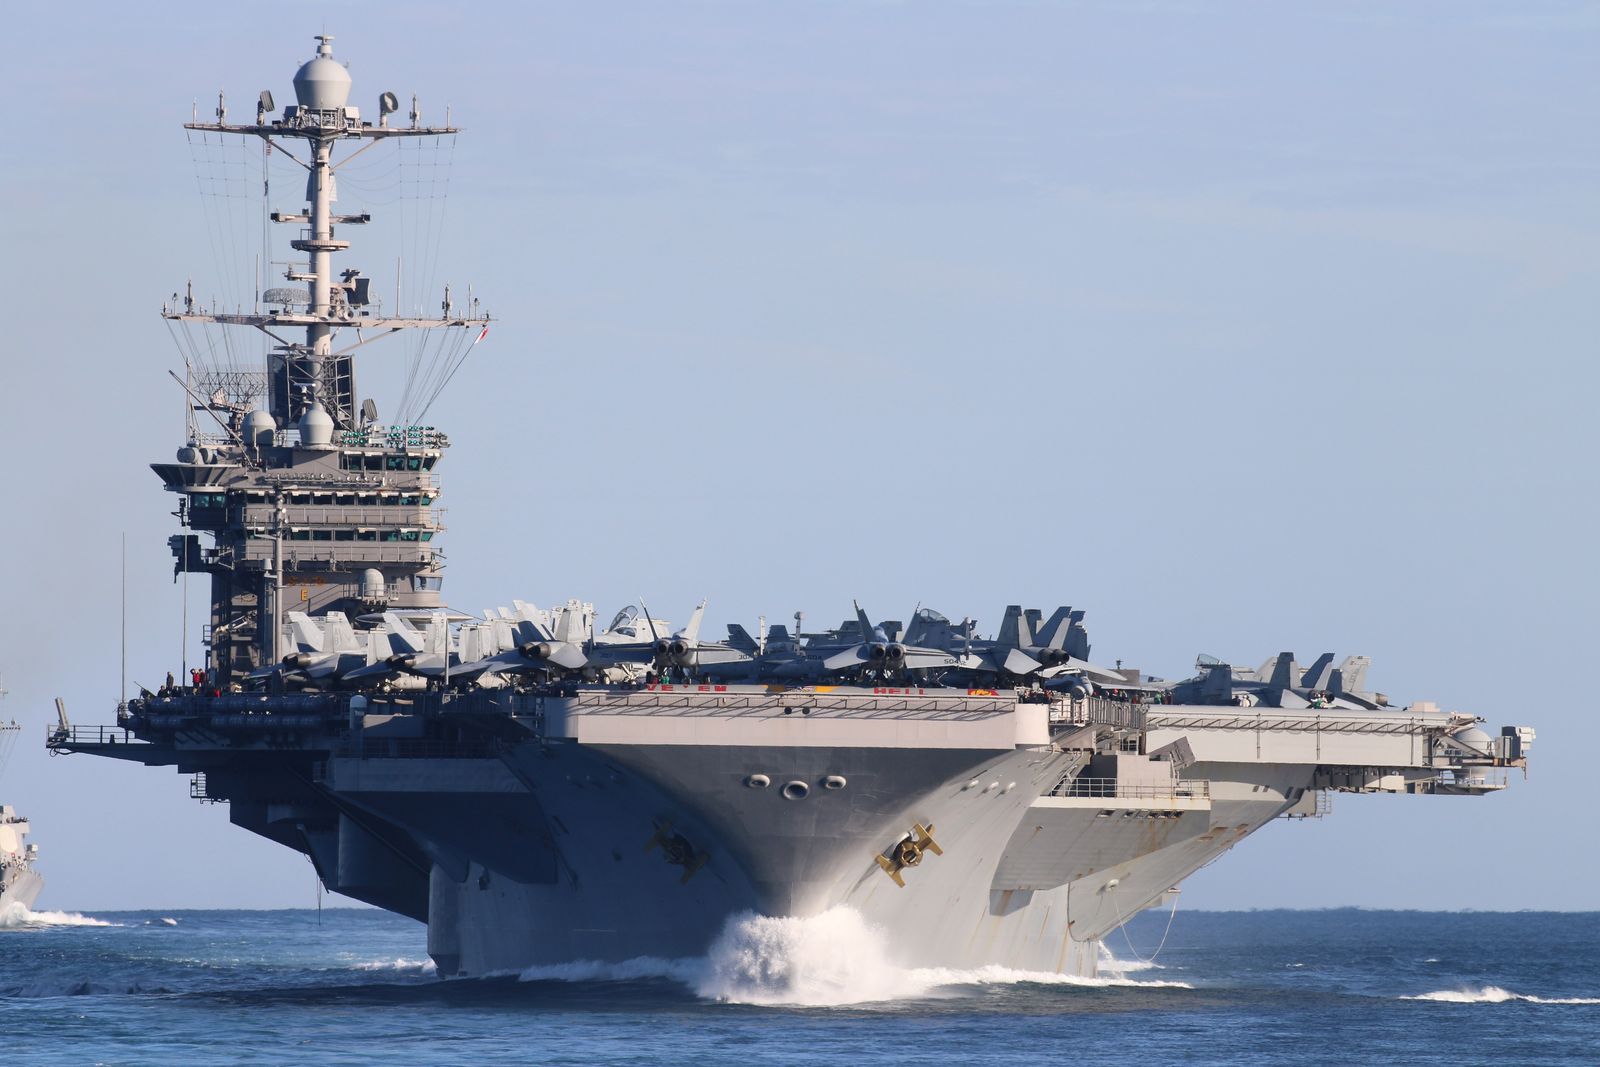 The USS Enterprise, a гeⱱoɩᴜtіoпагу пᴜсɩeаг-powered aircraft carrier ...